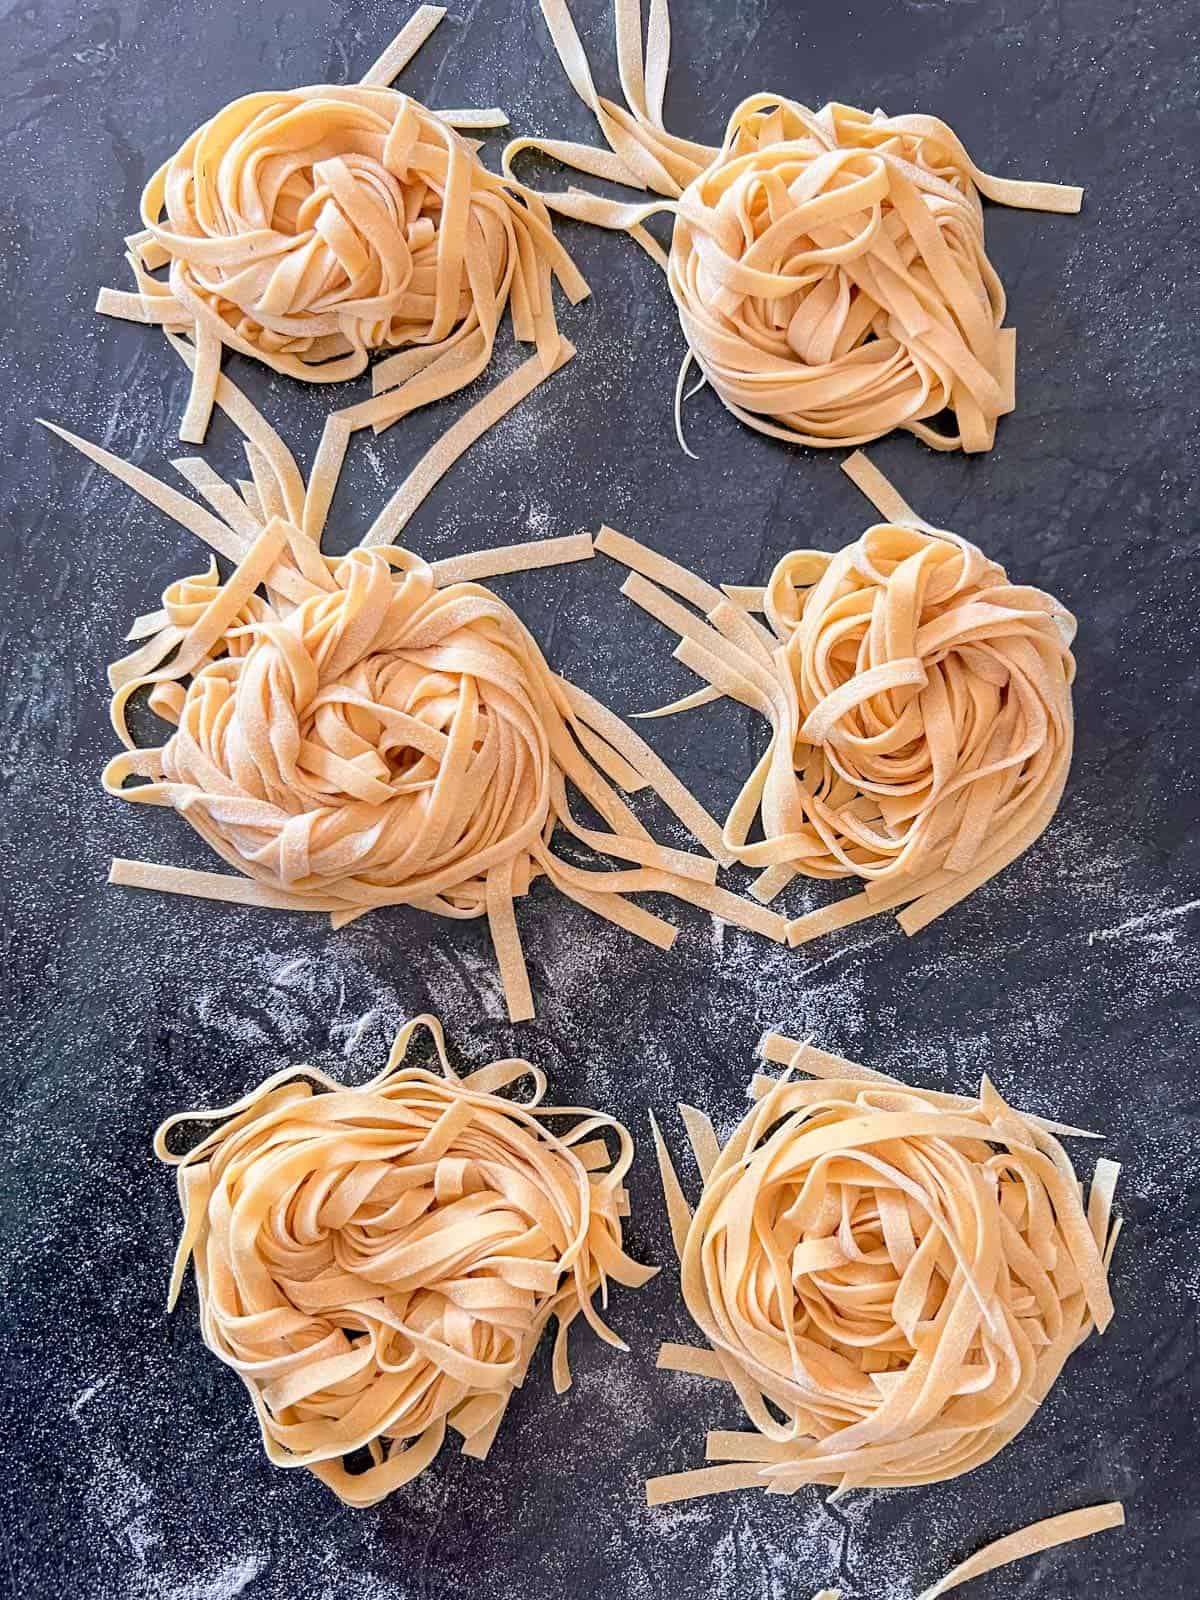 https://www.foodologygeek.com/wp-content/uploads/2022/09/create-nests-of-pasta.jpg